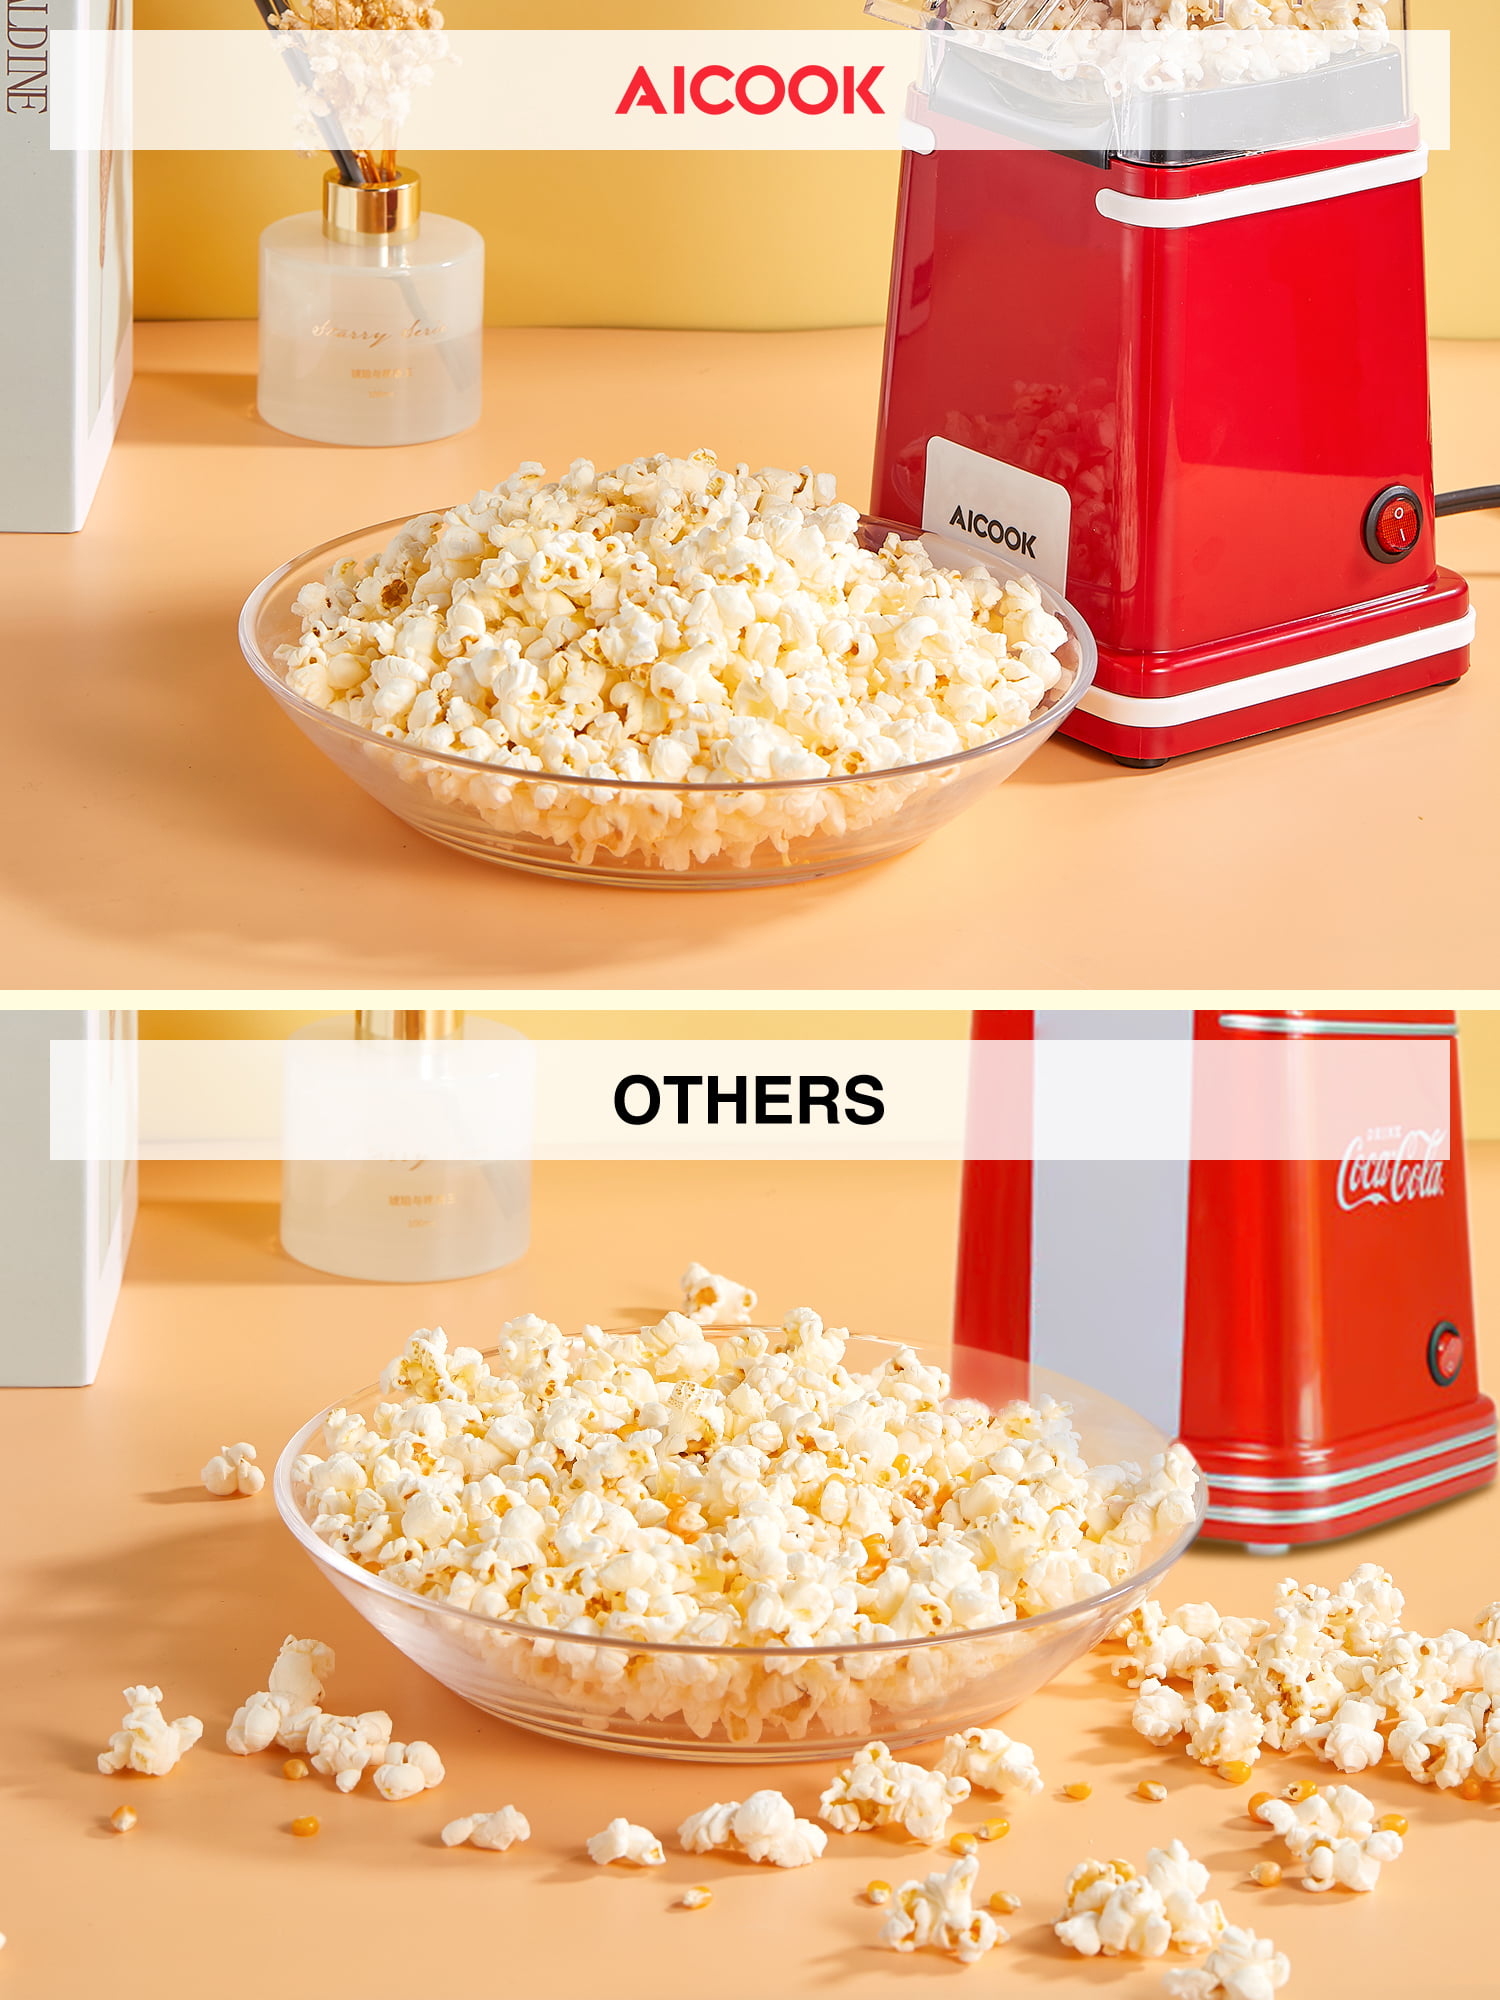 AICOOK Retro Hot Air Popcorn Maker, 1200W Fat-Free Popcorn Machine, Red 